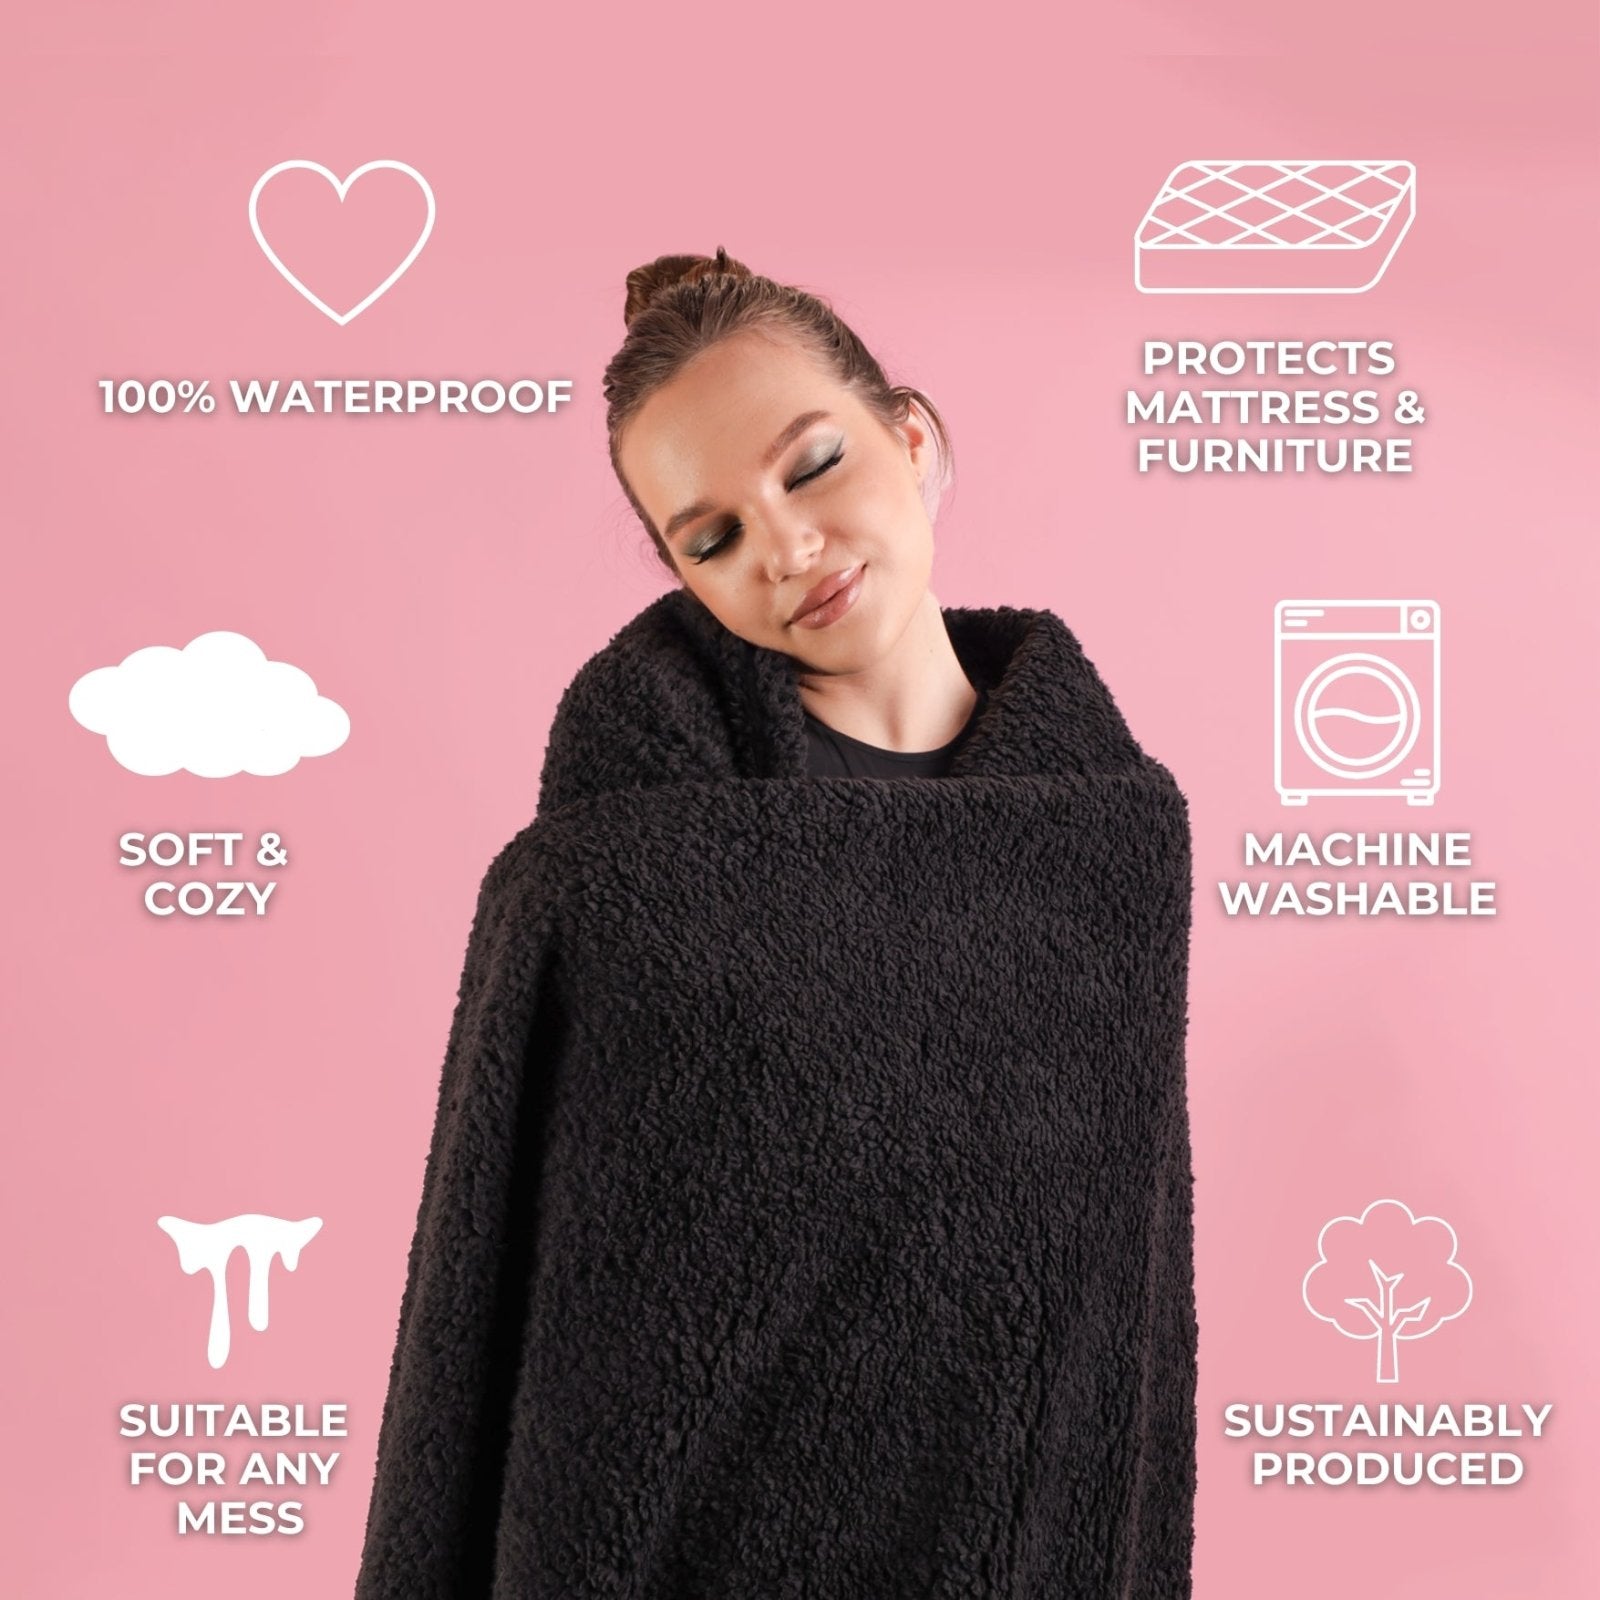 Loveblanket™ - The Waterproof Cuddle Blanket + FREE E-book - Loveblanket